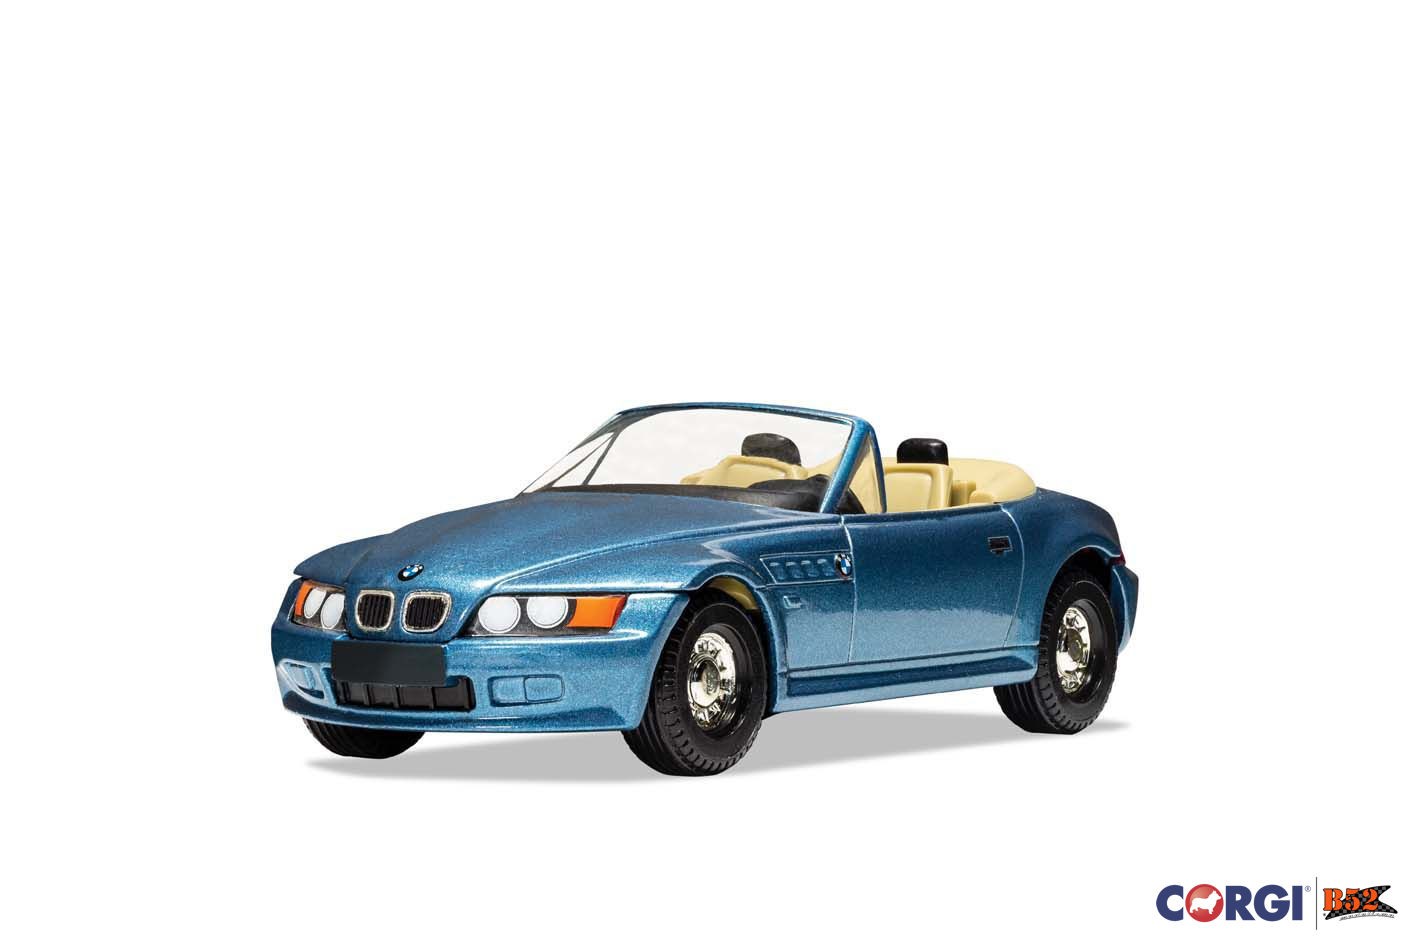 Corgi - James Bond BMW Z3 "GoldenEye": CC04905